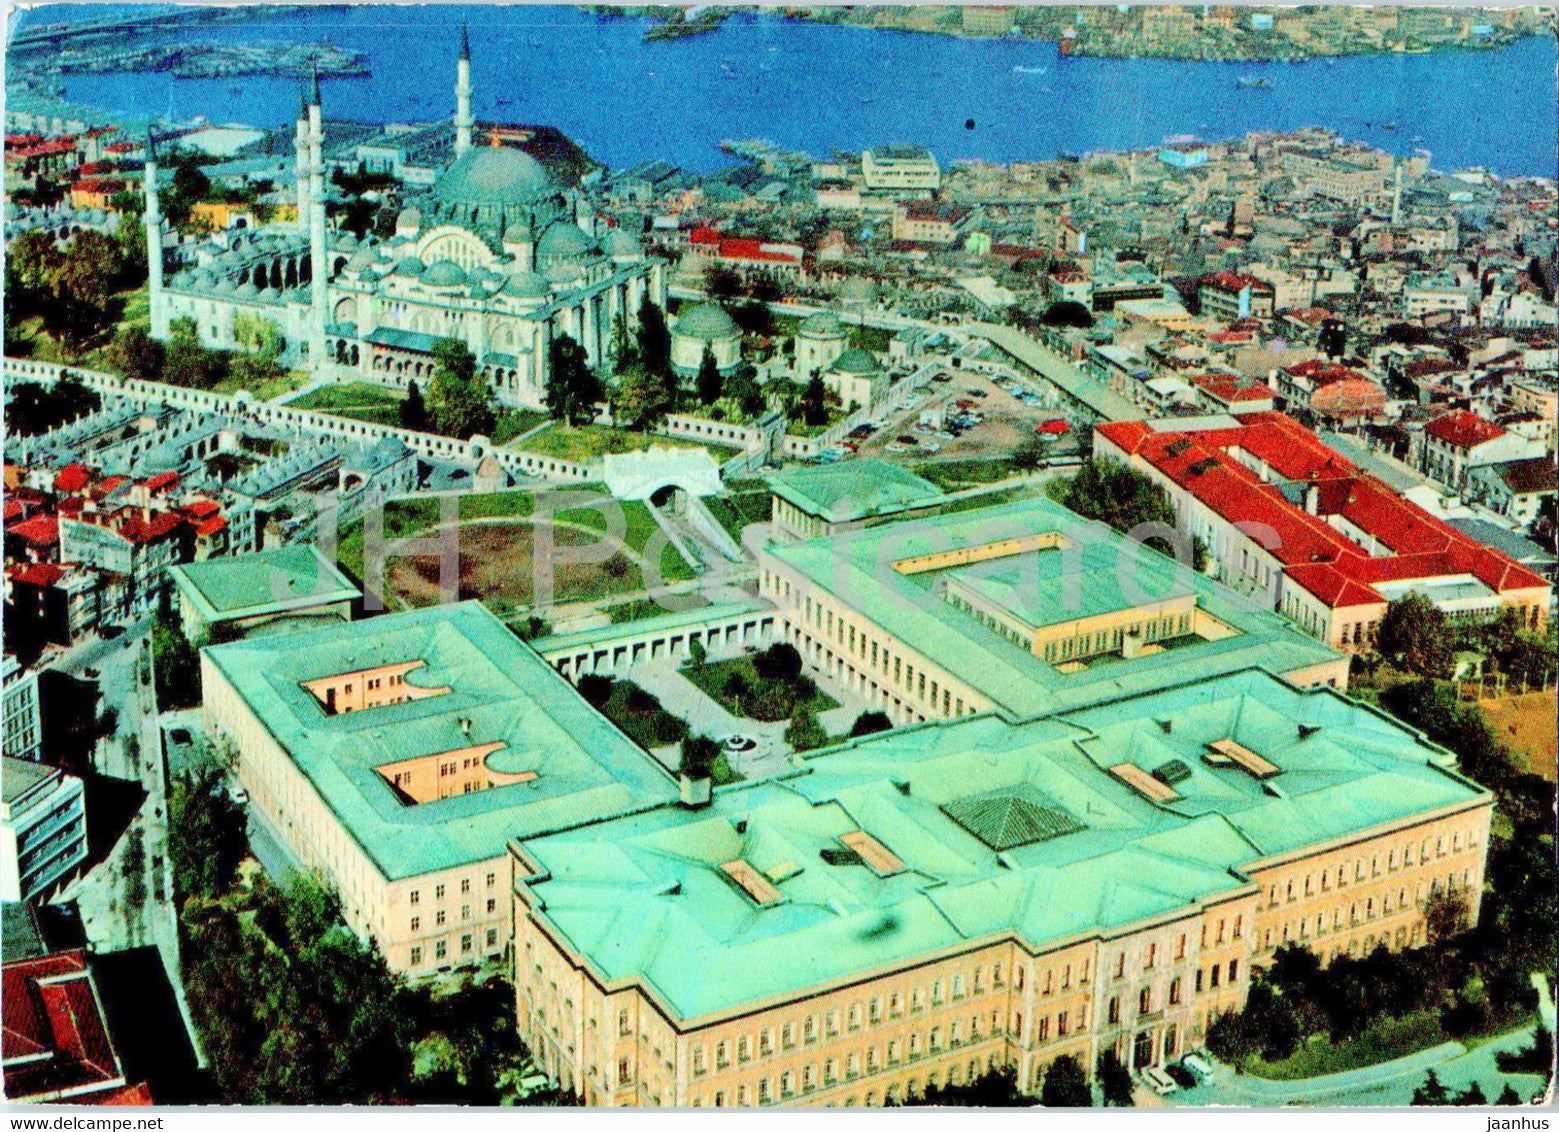 Istanbul - universite merkez binasi - Central building of the University - Mosque Suleymaniye - 1973 - Turkey - used - JH Postcards